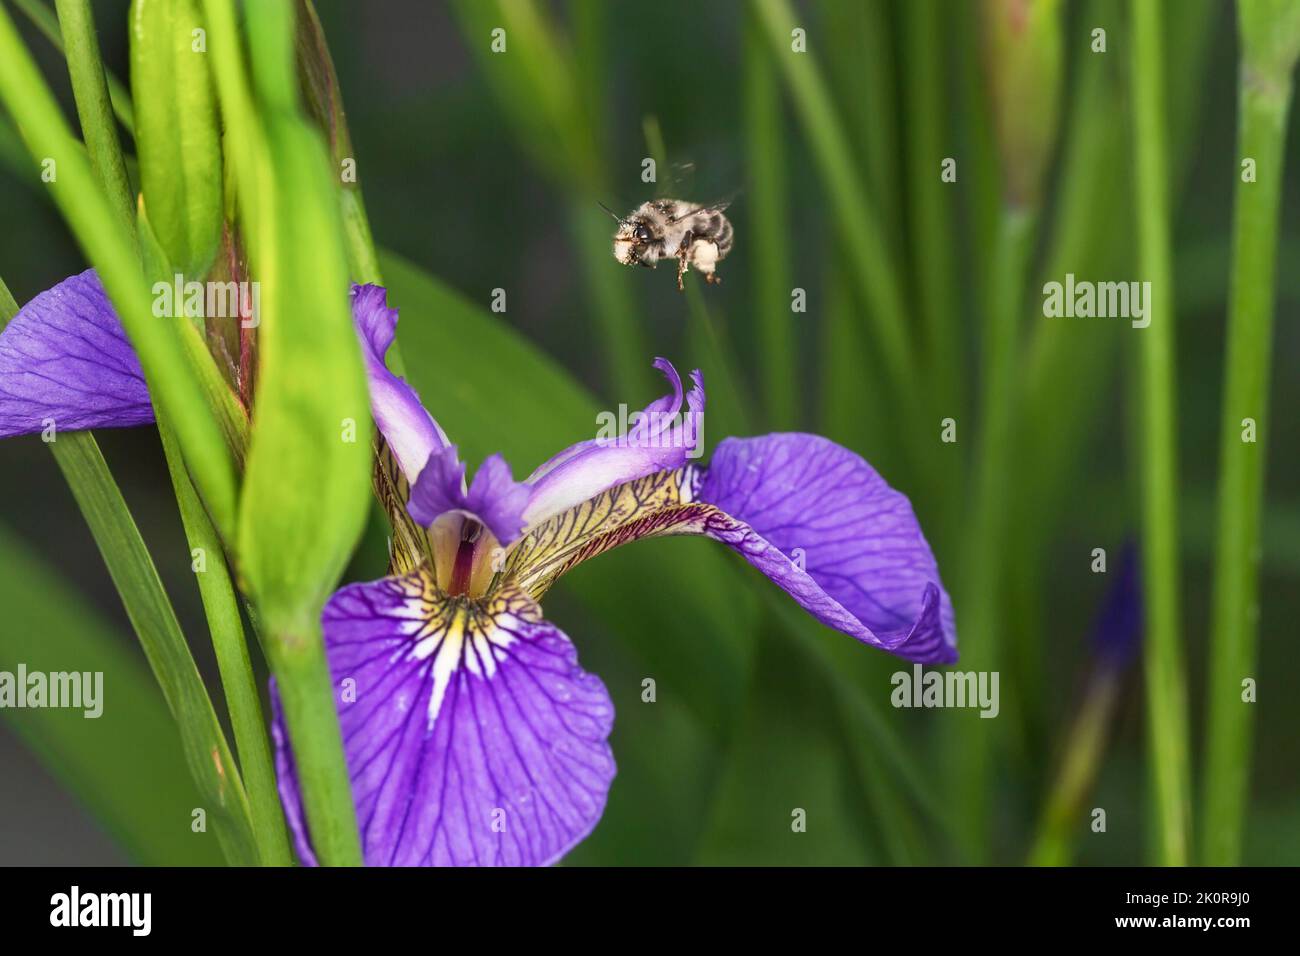 A small bumblebee lands on a Siberian iris flower. Stock Photo